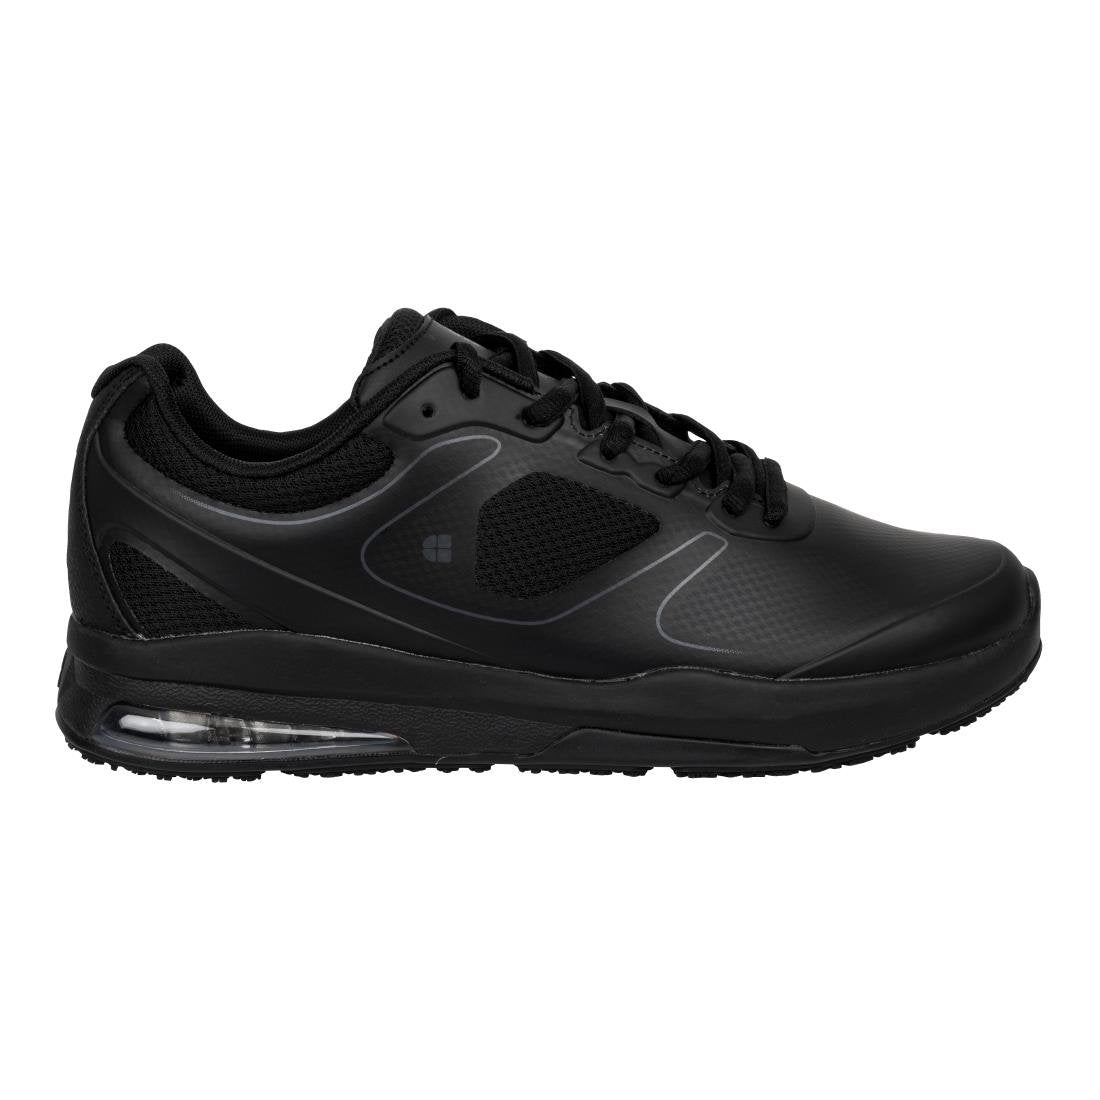 BB586-45 Shoes for Crews Men's Evolution Trainers Black Size 45